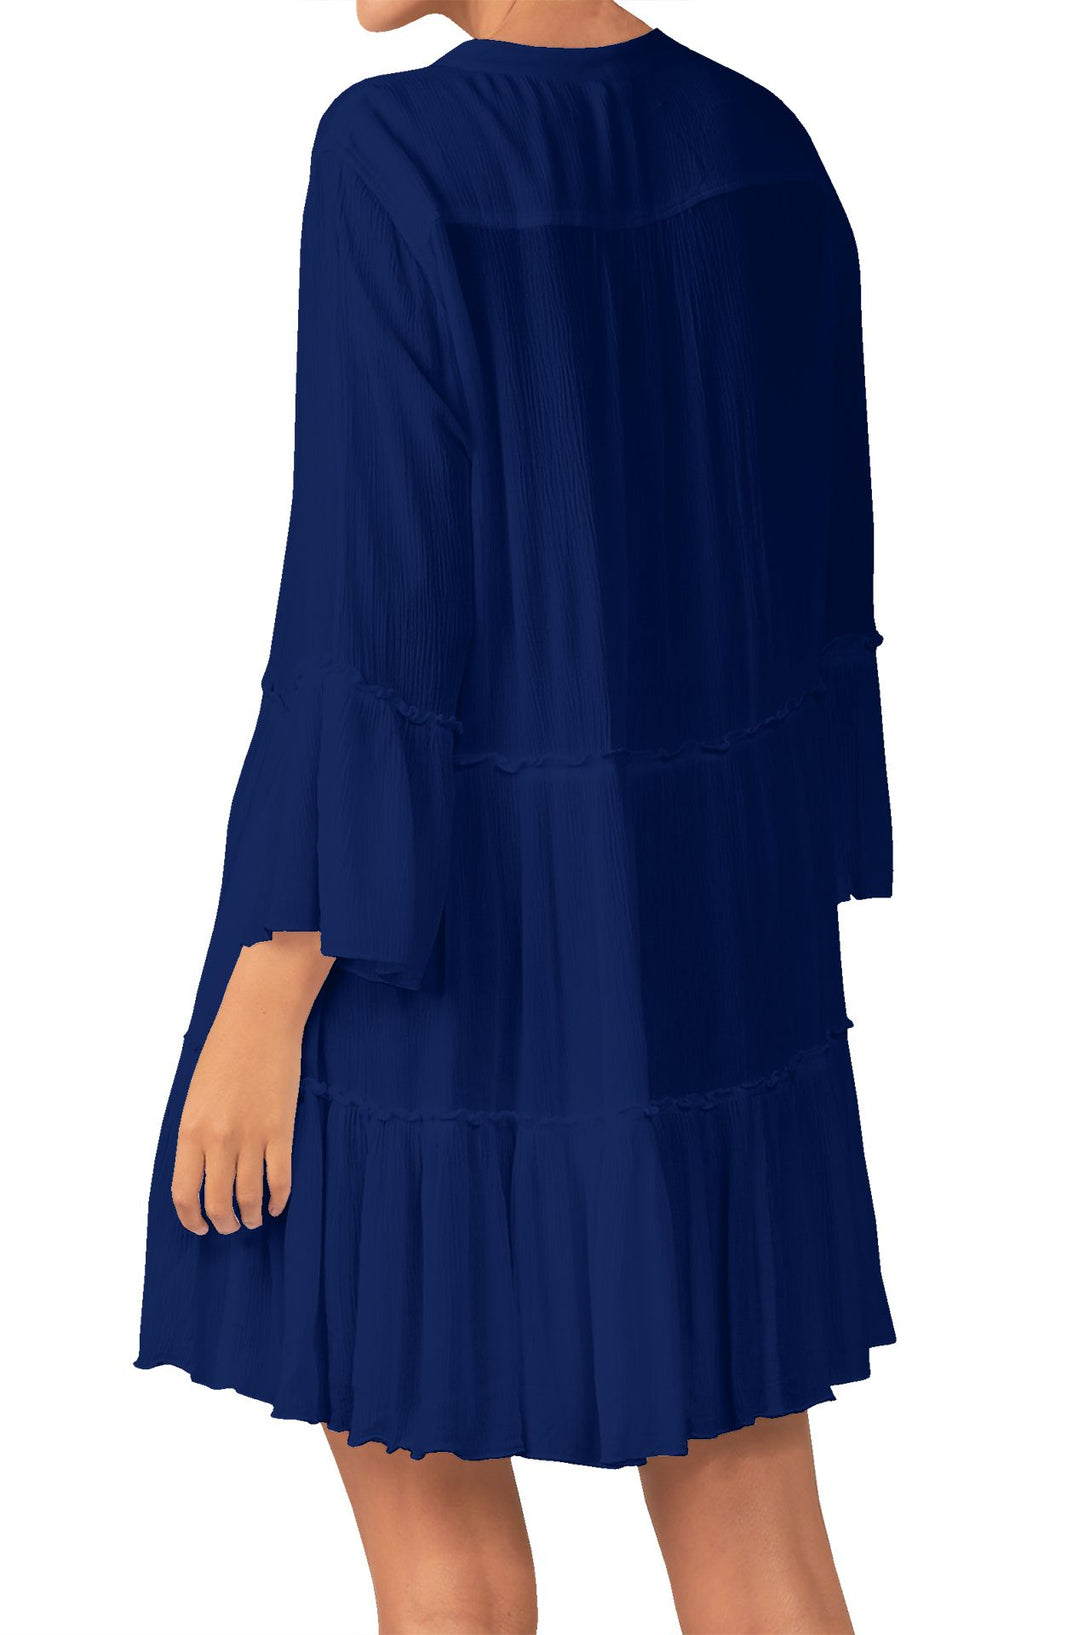  royal blue mini dress, short sleeve summer dresses, Shahida Parides, mini frock for women,